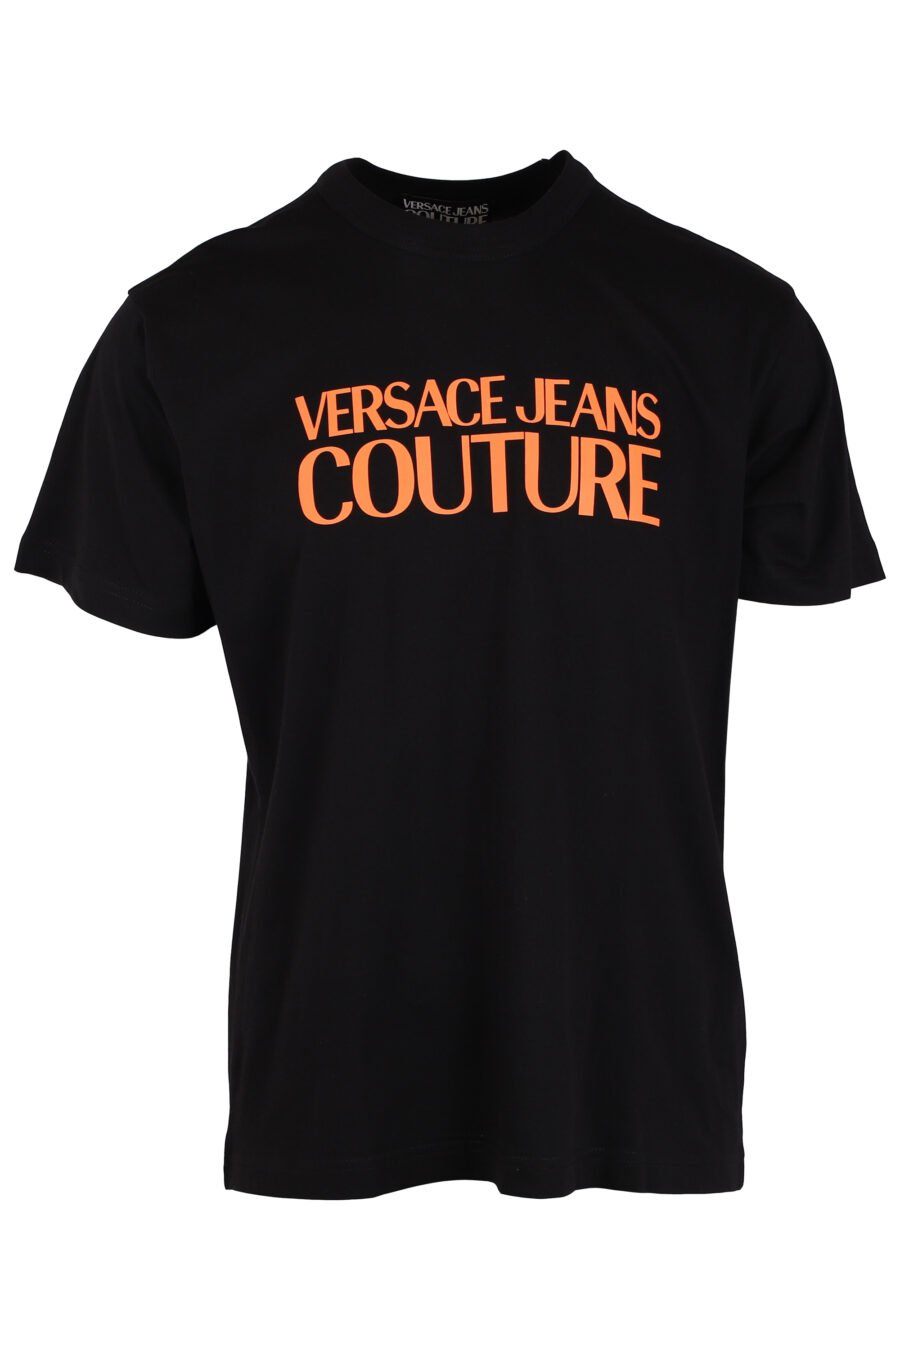 T-Shirt schwarz mit großem orangefarbenem Logo - IMG 4018